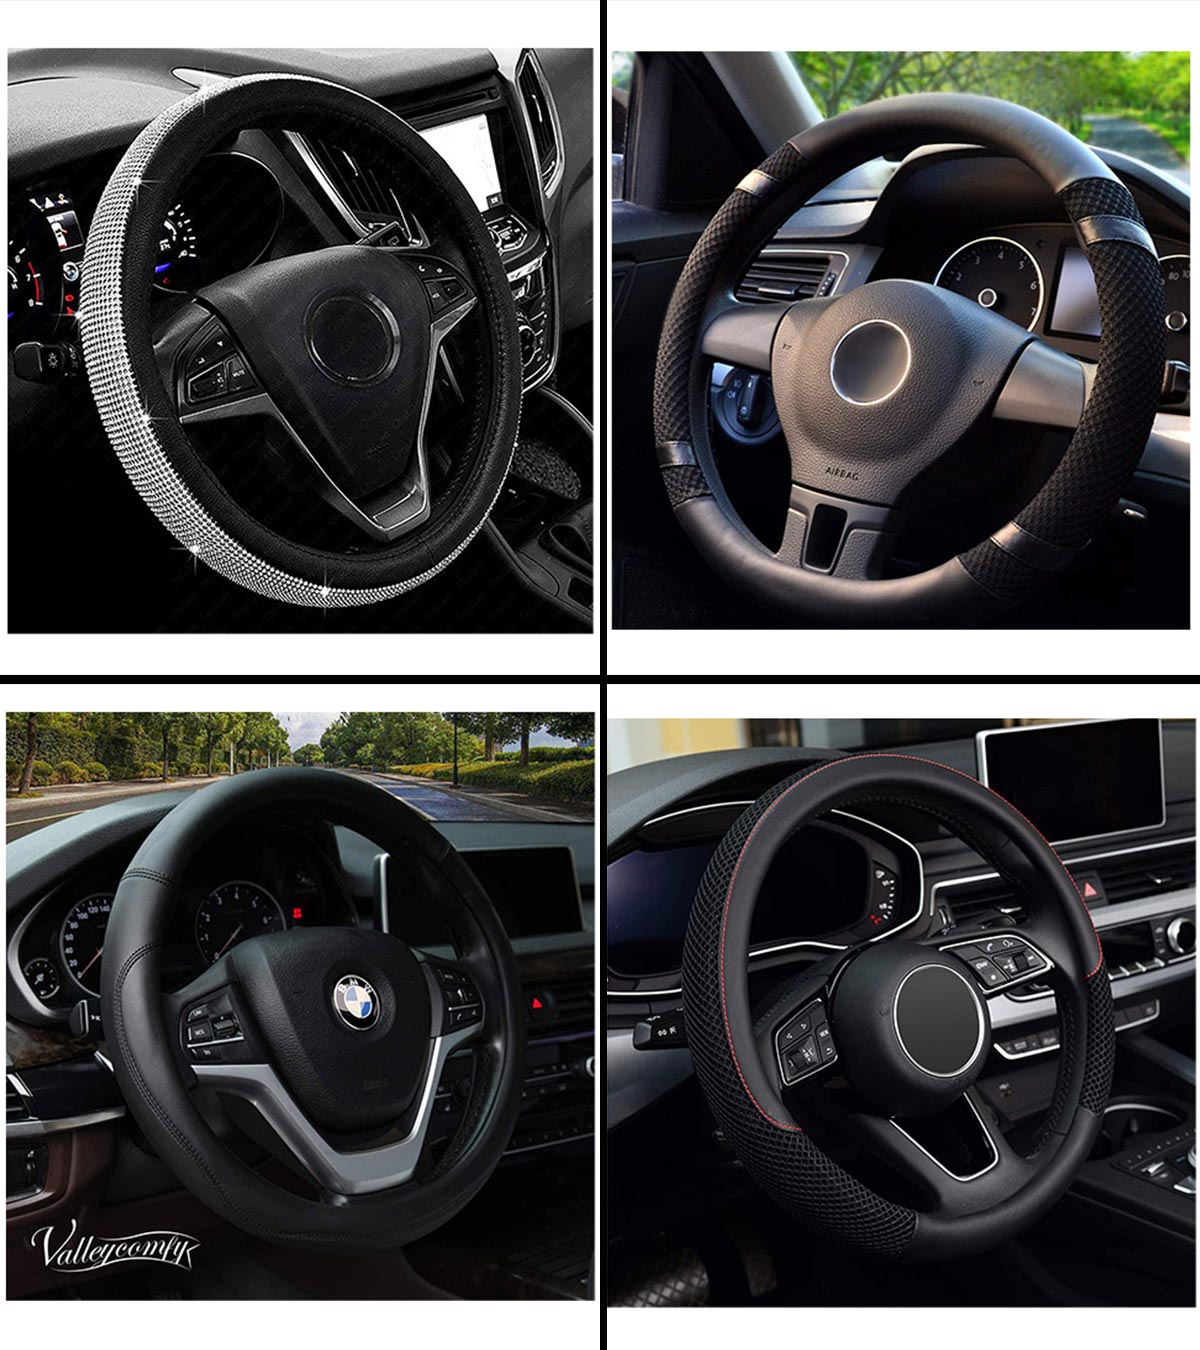 UKB4C Luxury Steering Wheel Cover Beige Black & Chrome 37-39cm Diameter Universal Fit Protection 